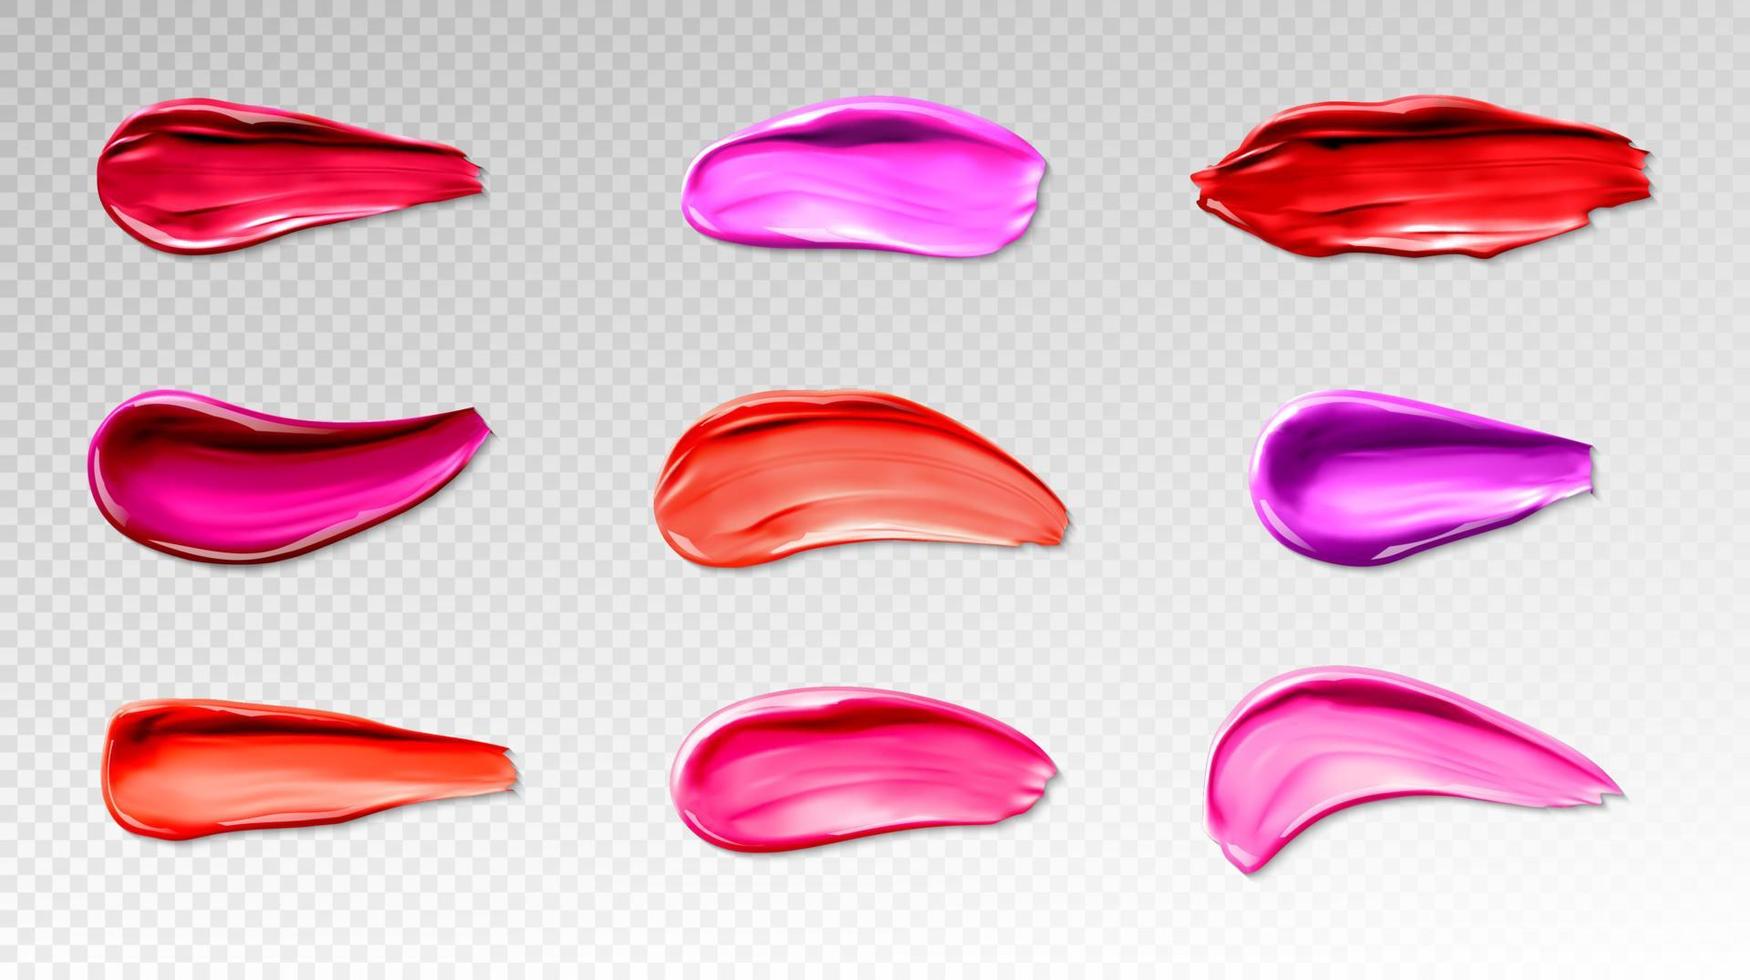 Lipstick swatches, smears of liquid lip gloss vector